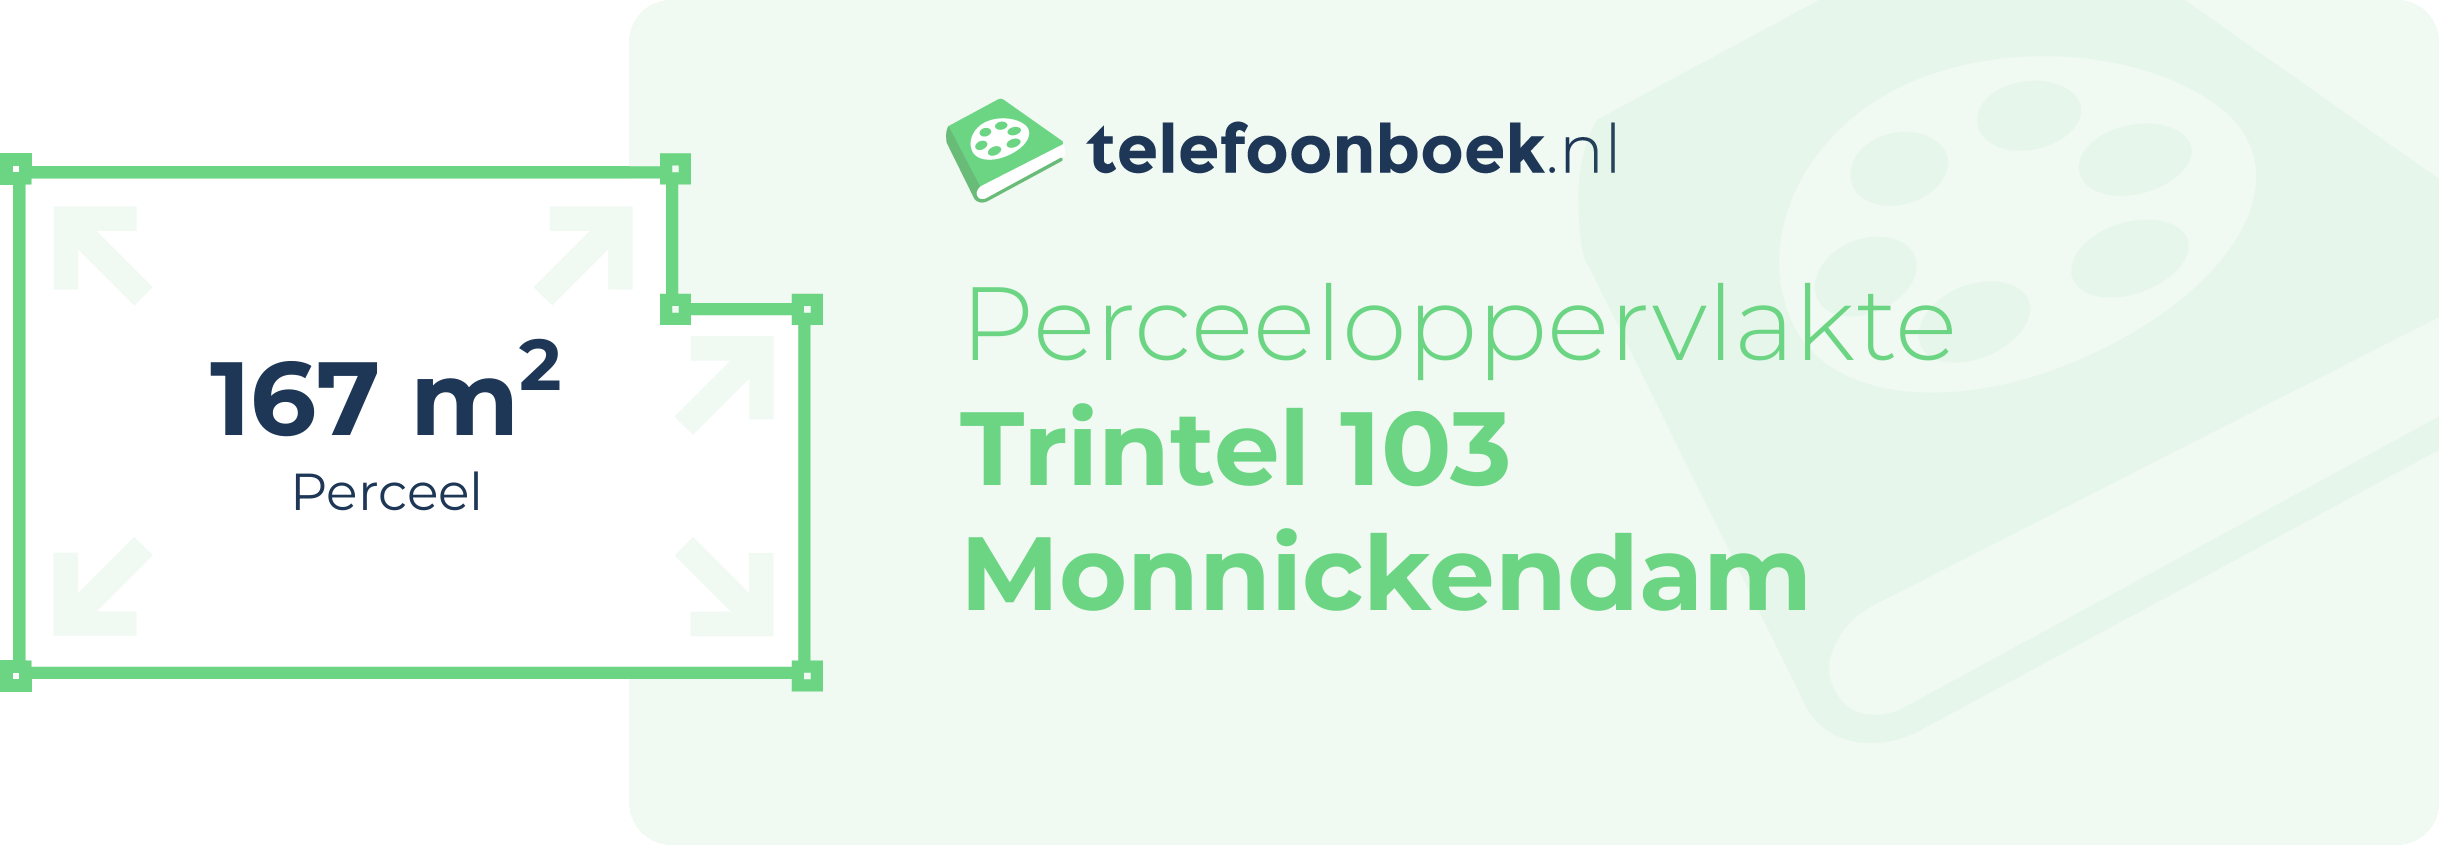 Perceeloppervlakte Trintel 103 Monnickendam